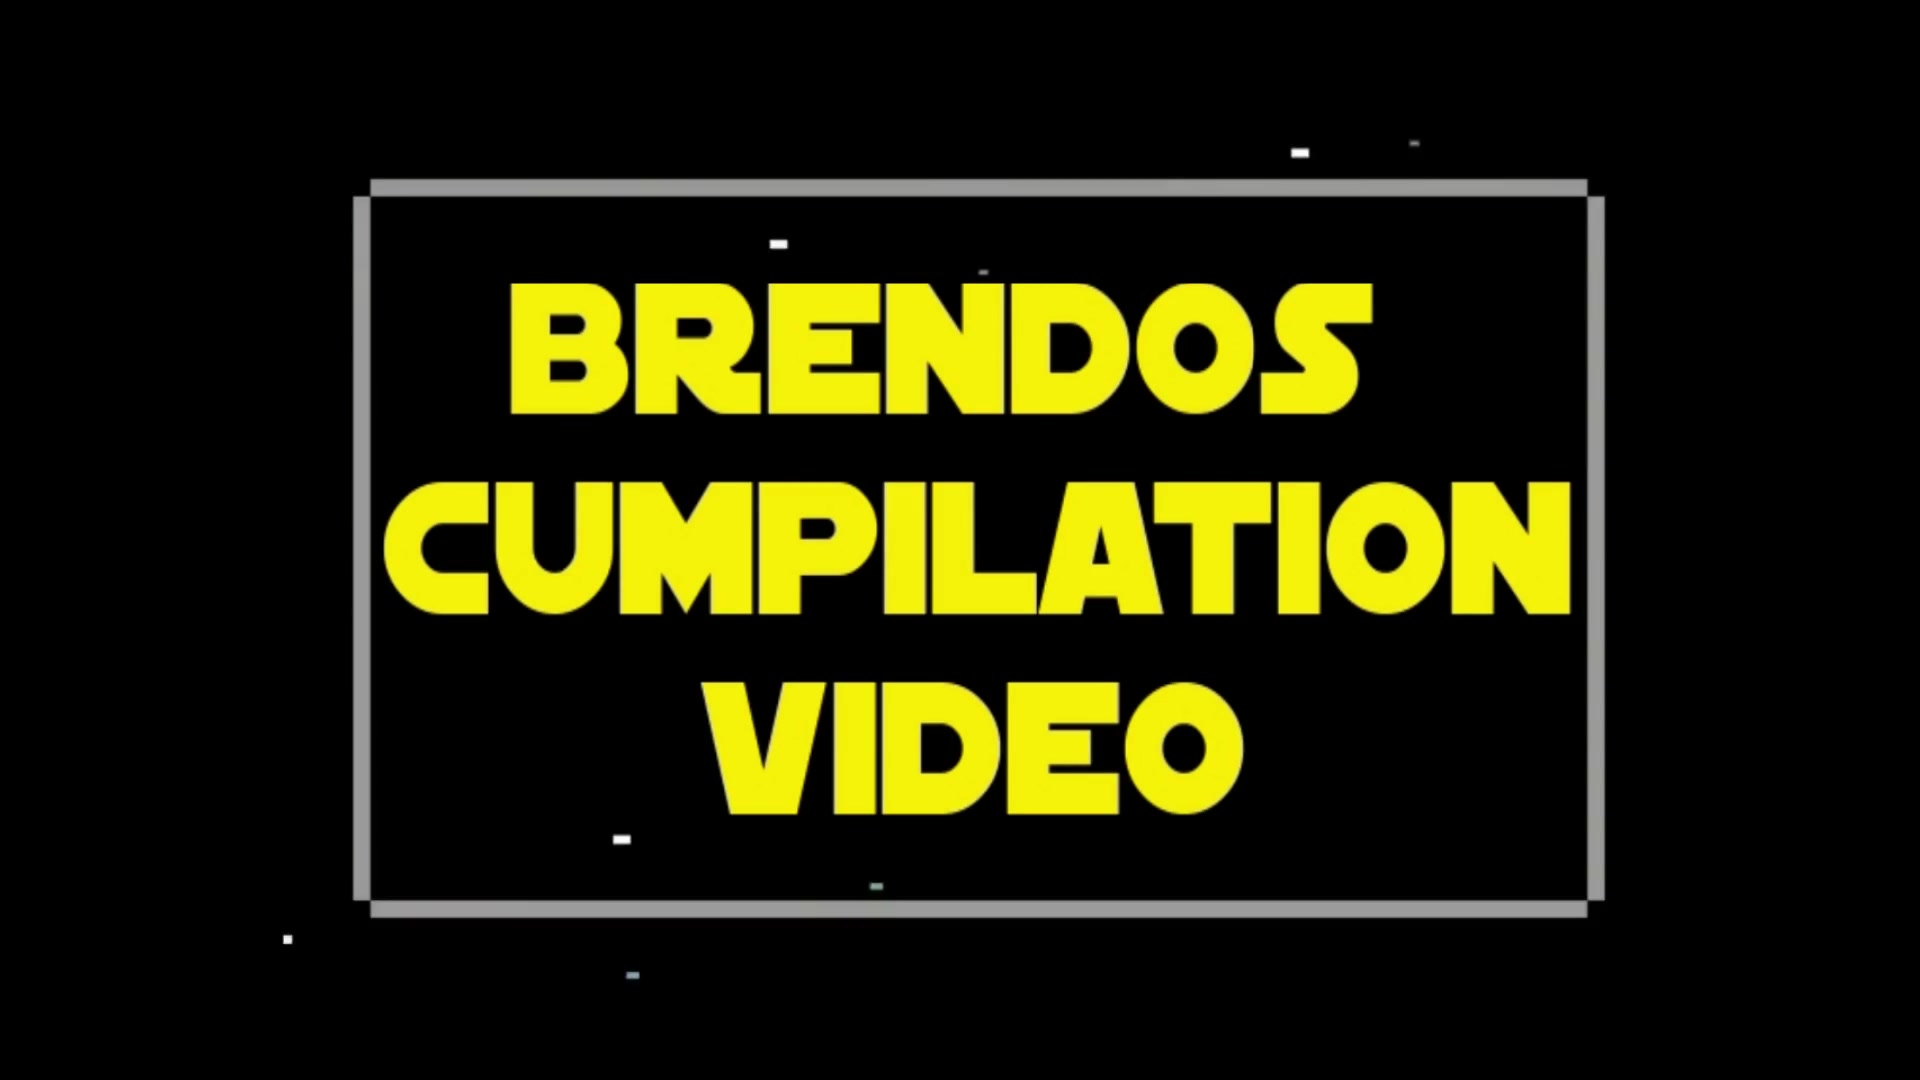 Brendos Cumpilation Video